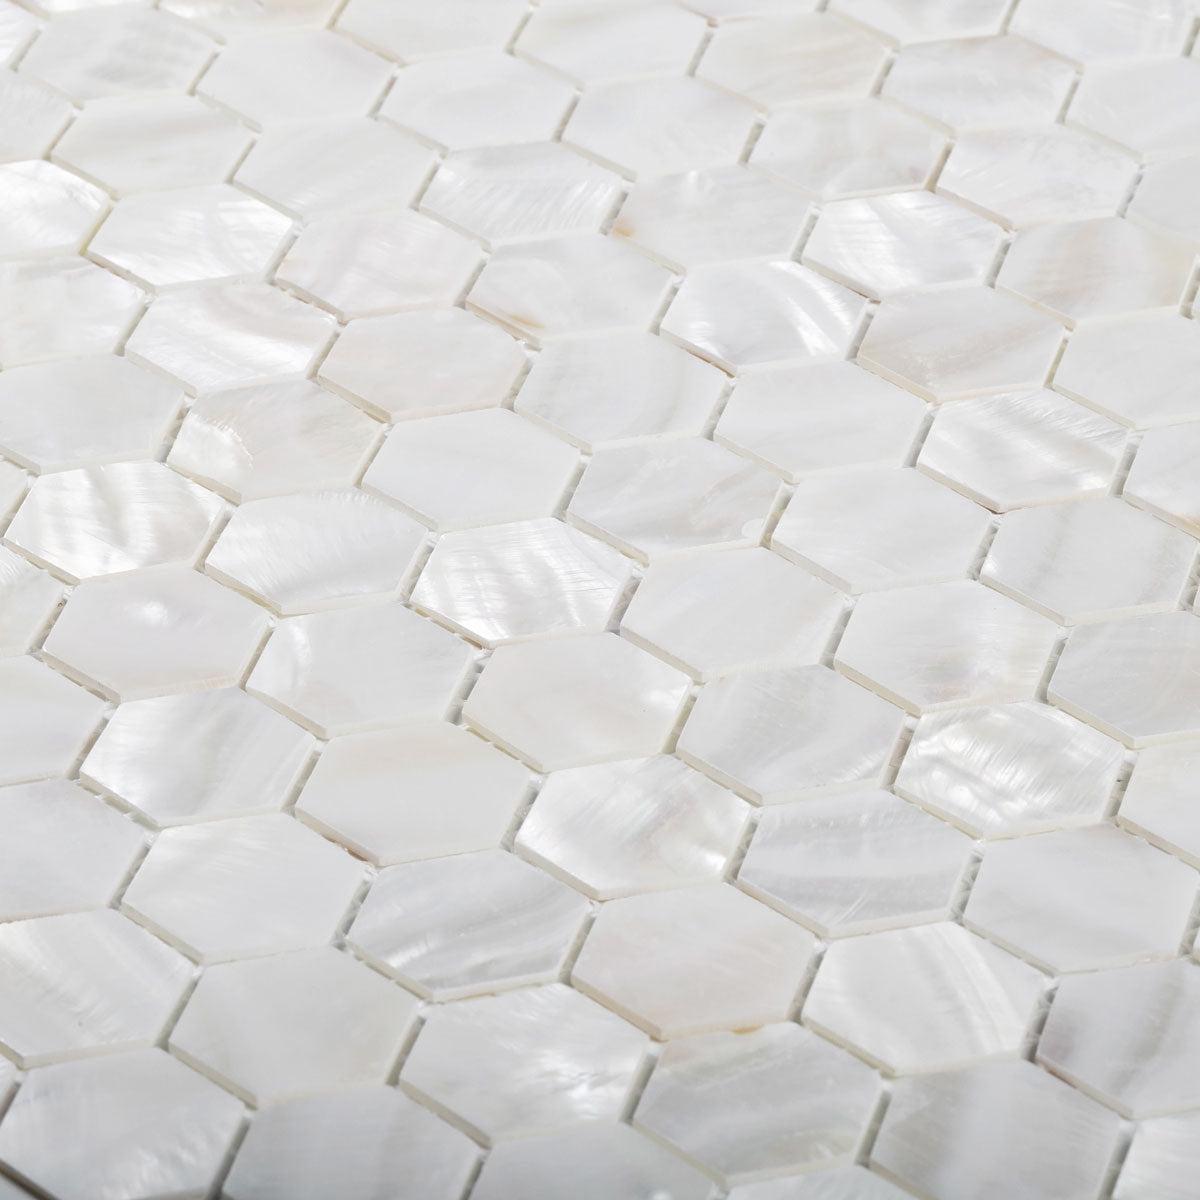 Shell hexagon mosaic tile